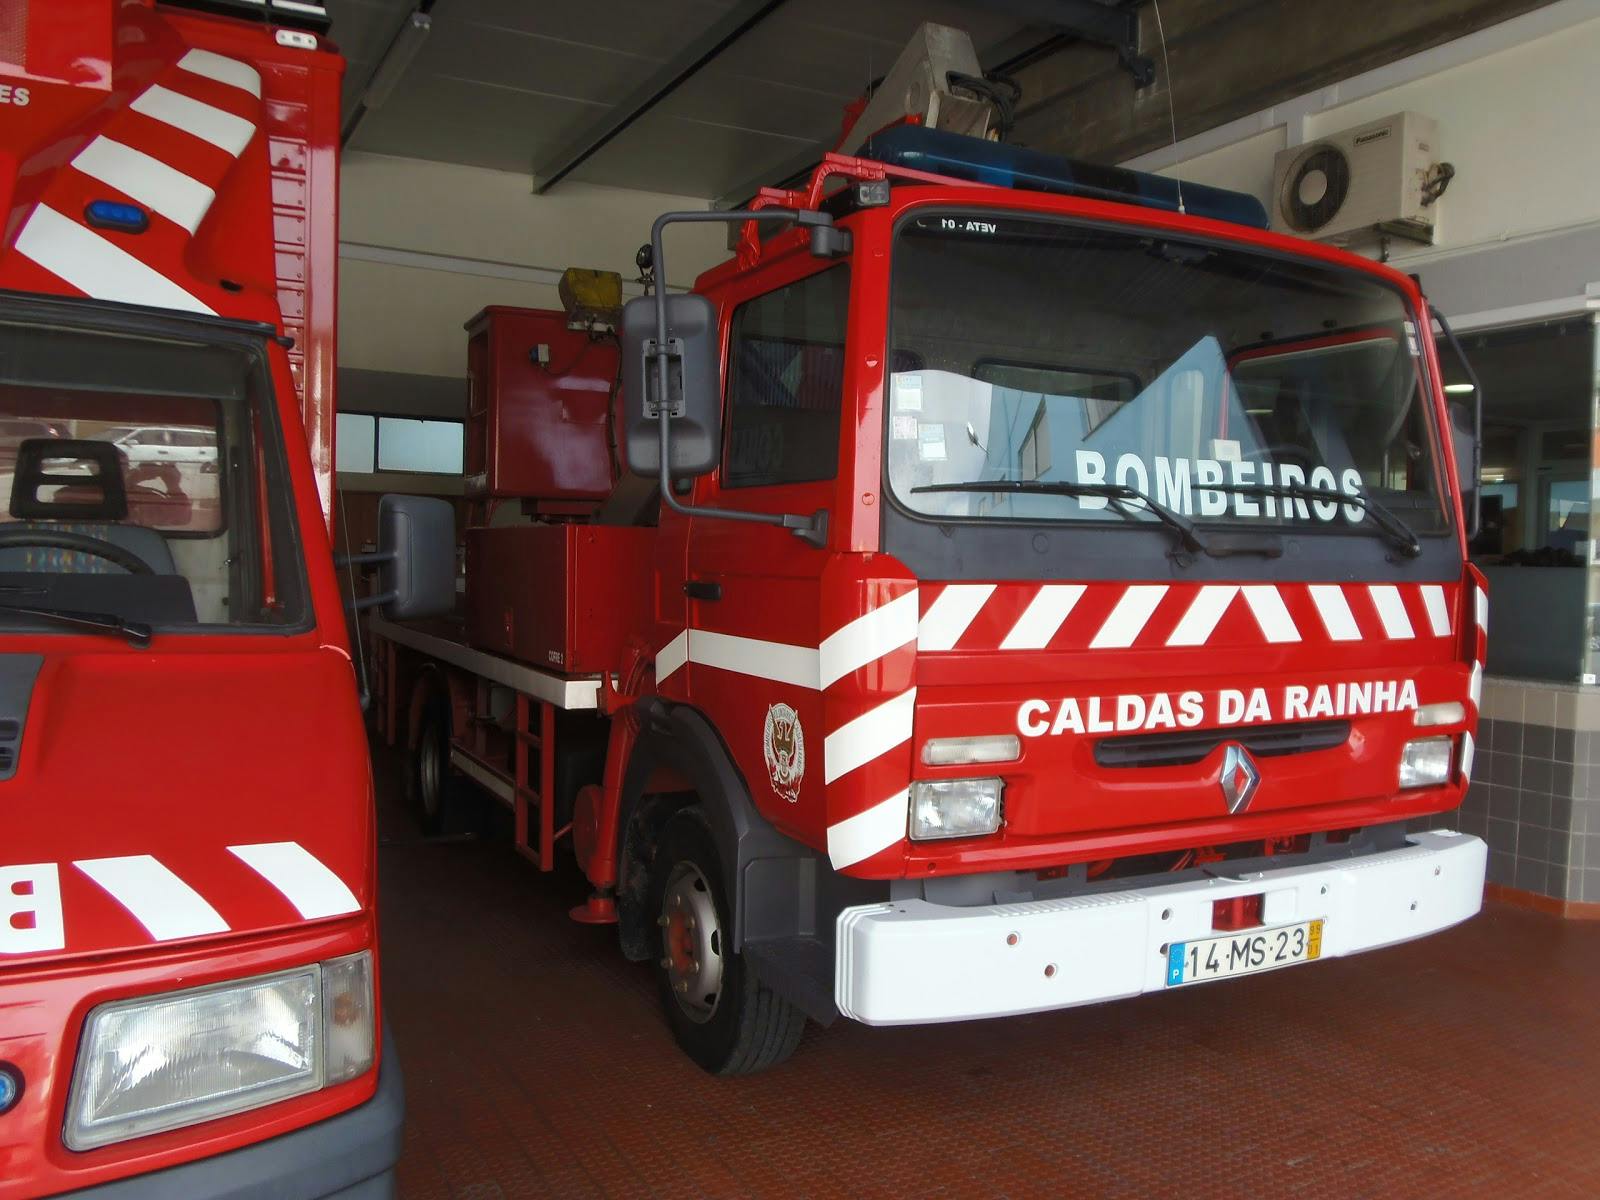 Image - Volunteer firefighters from Caldas da Rainha